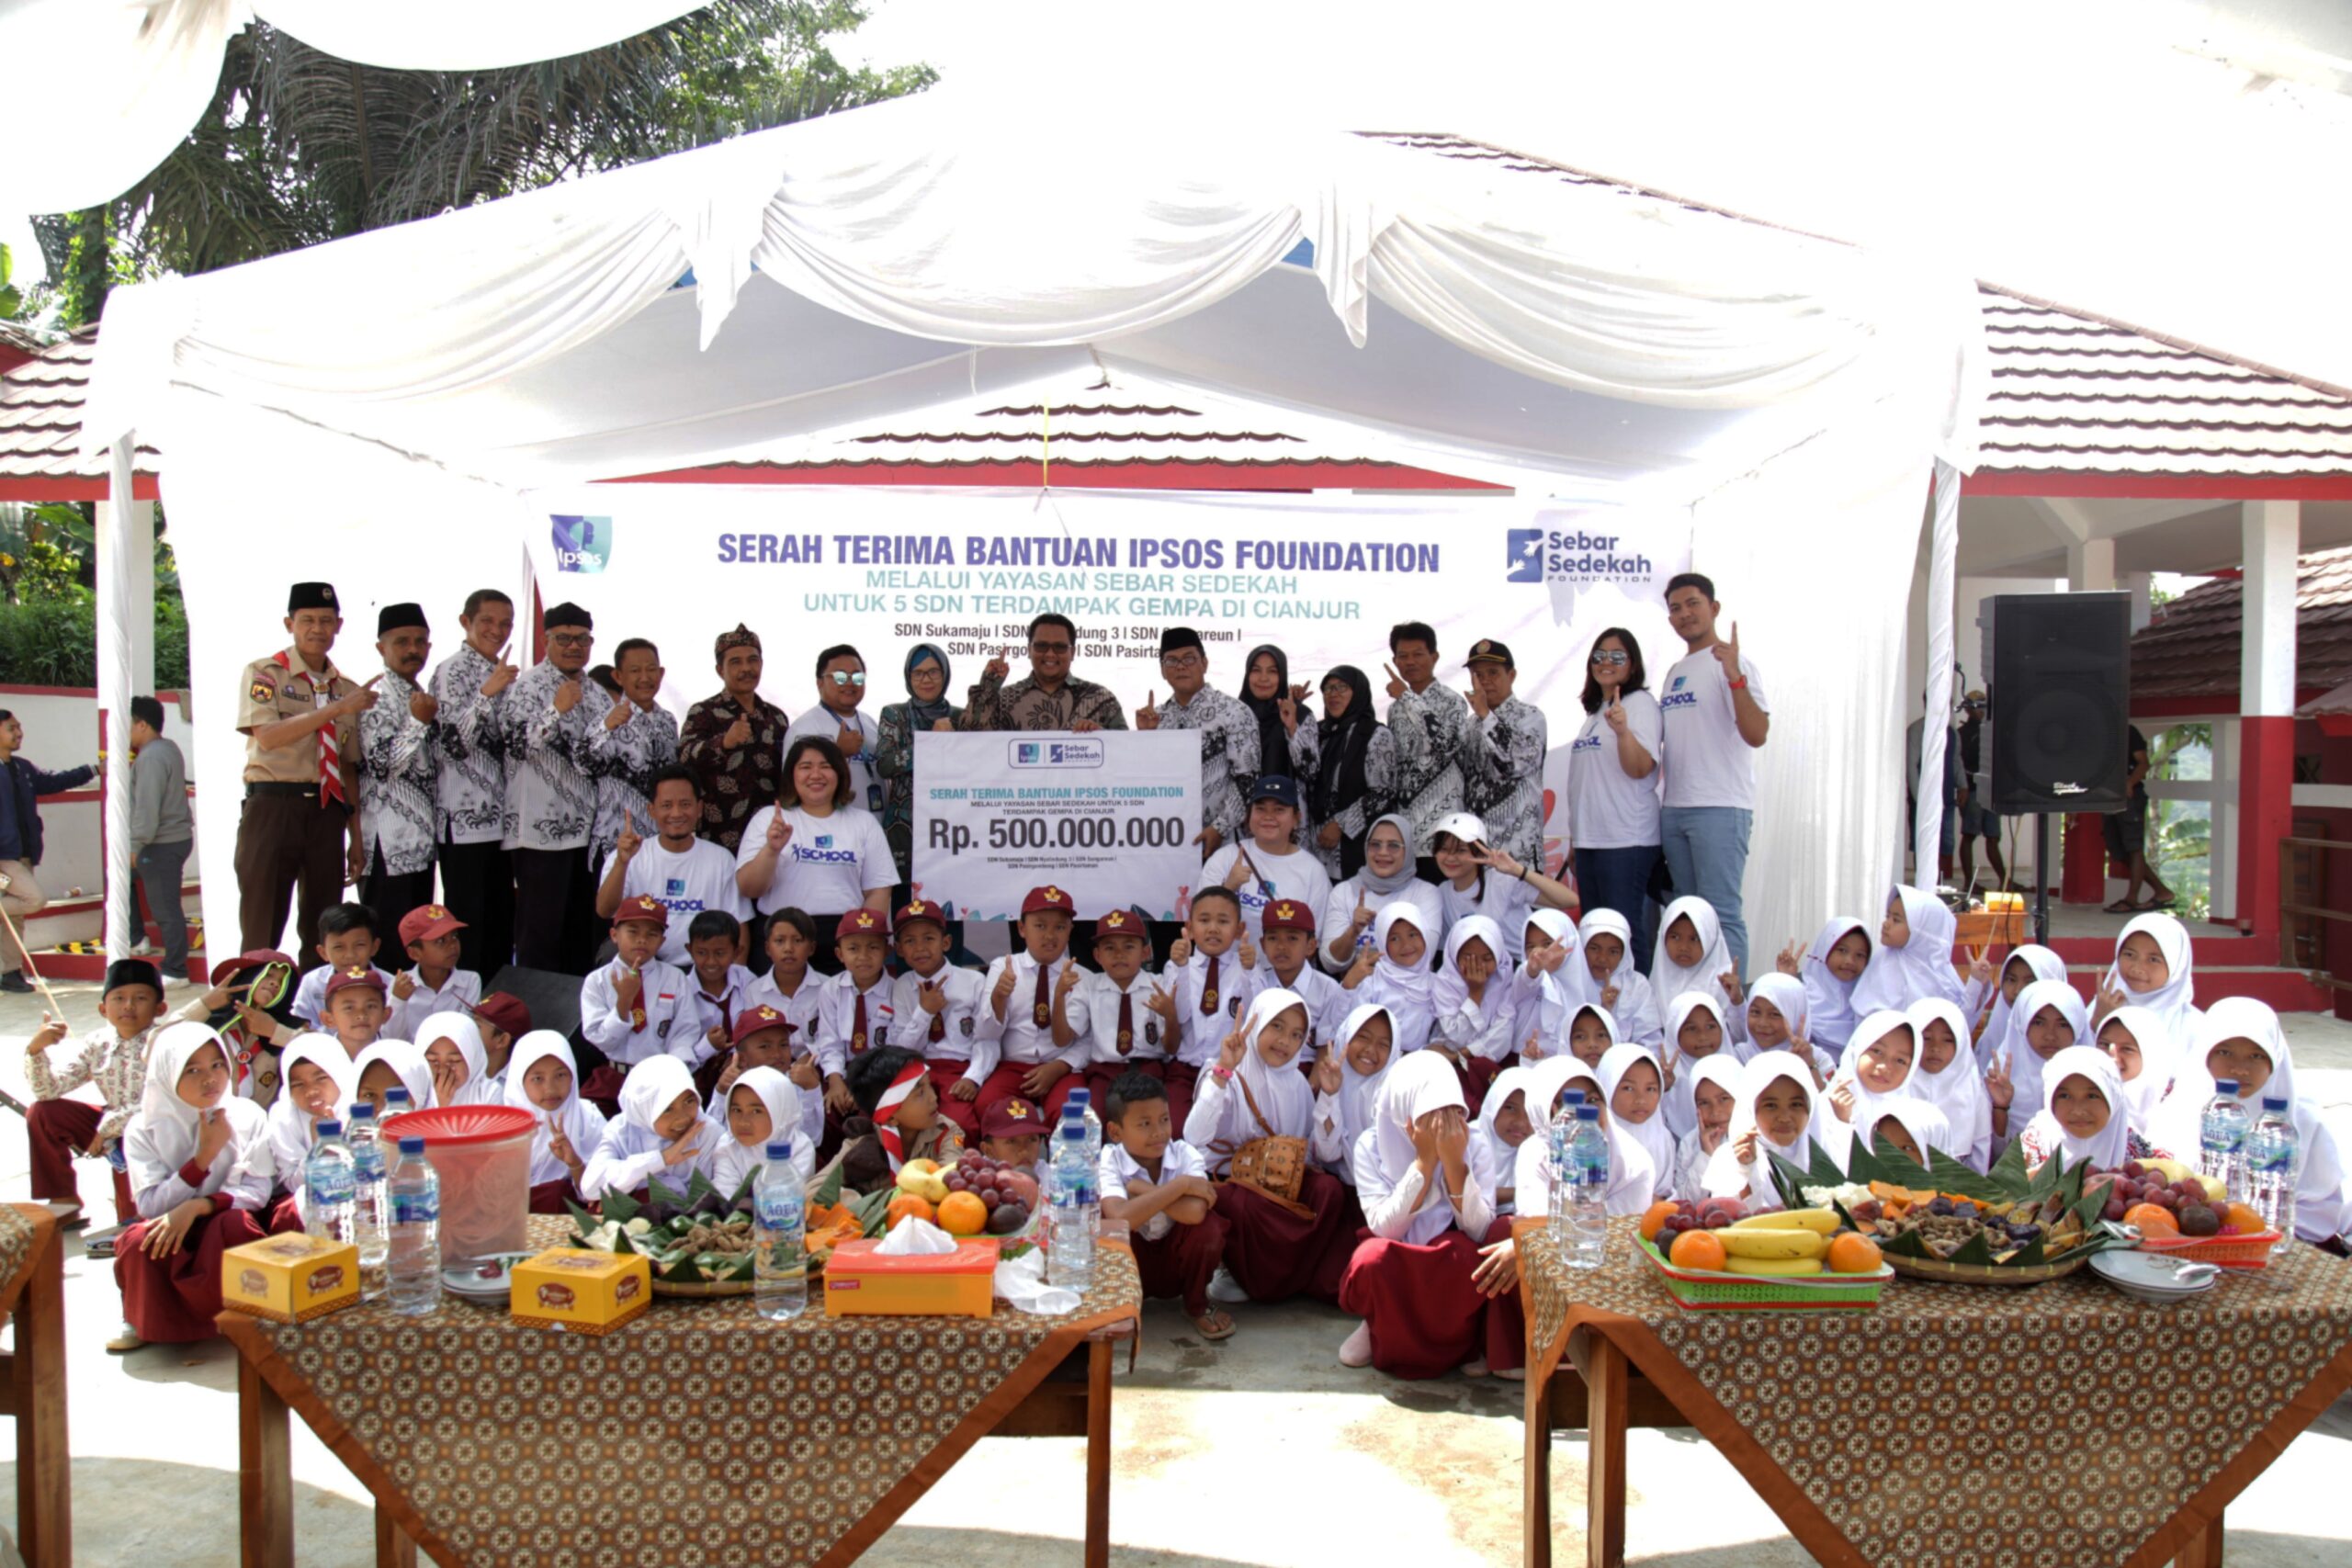  IPSOS Foundation Sumbang Rp 500.000.000 untuk  Sekolah Terdampak Gempa Bumi di Cianjur